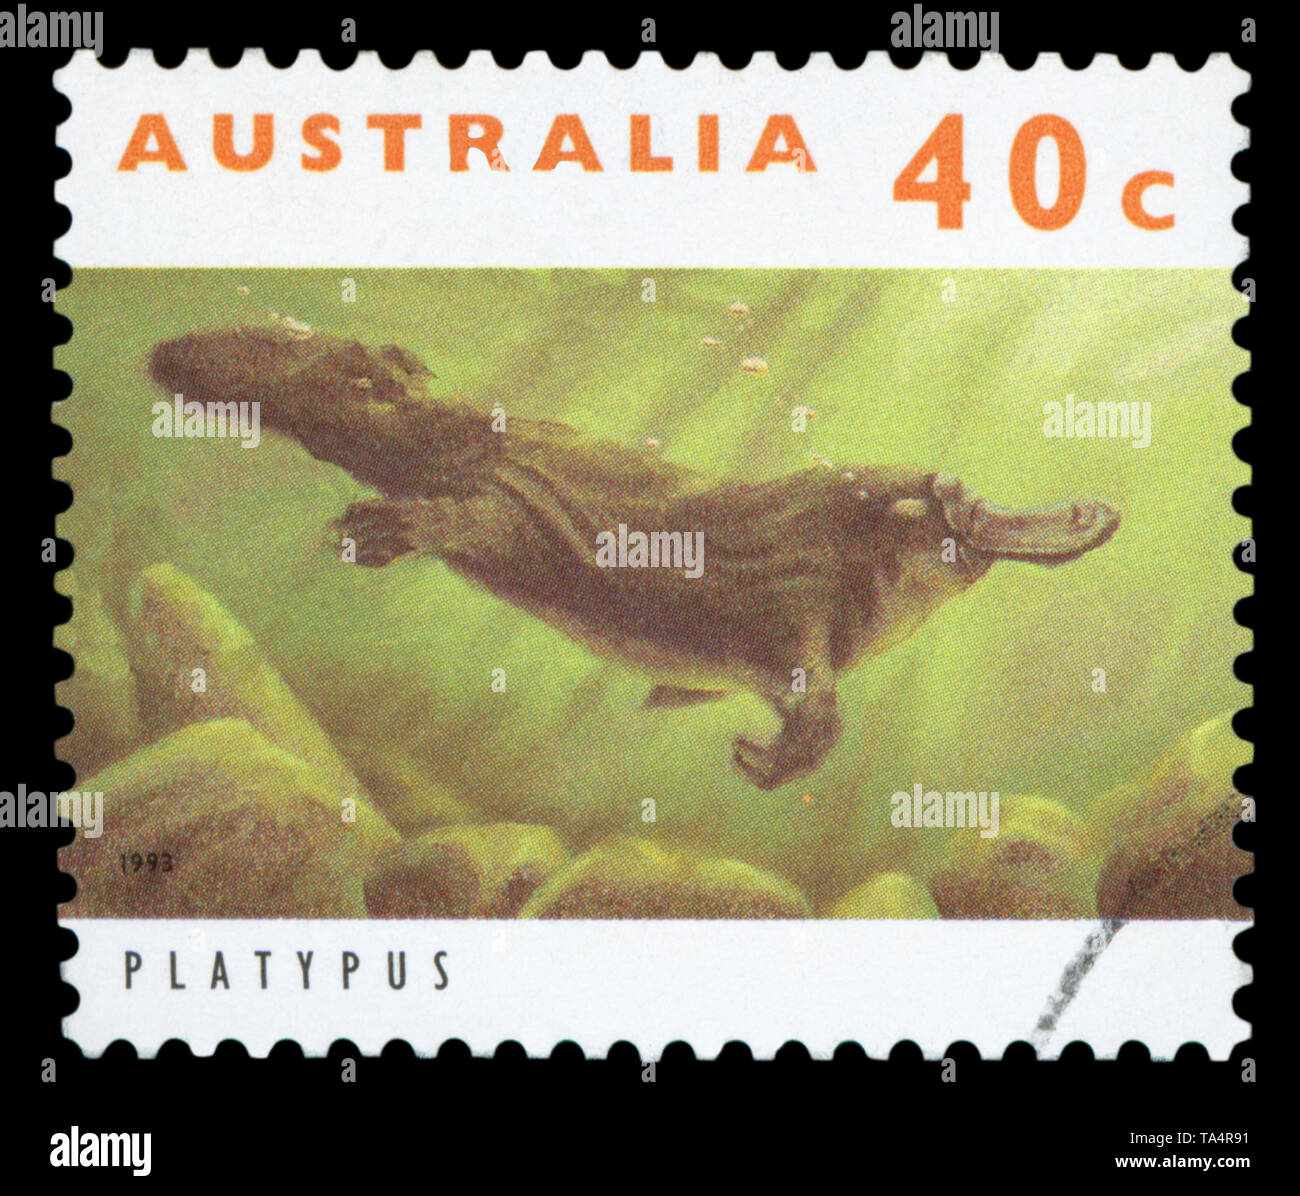 AUSTRALIA - circa 1993: un sello impreso en Australia muestra los ornitorrincos, animales series, circa 1993. Foto de stock